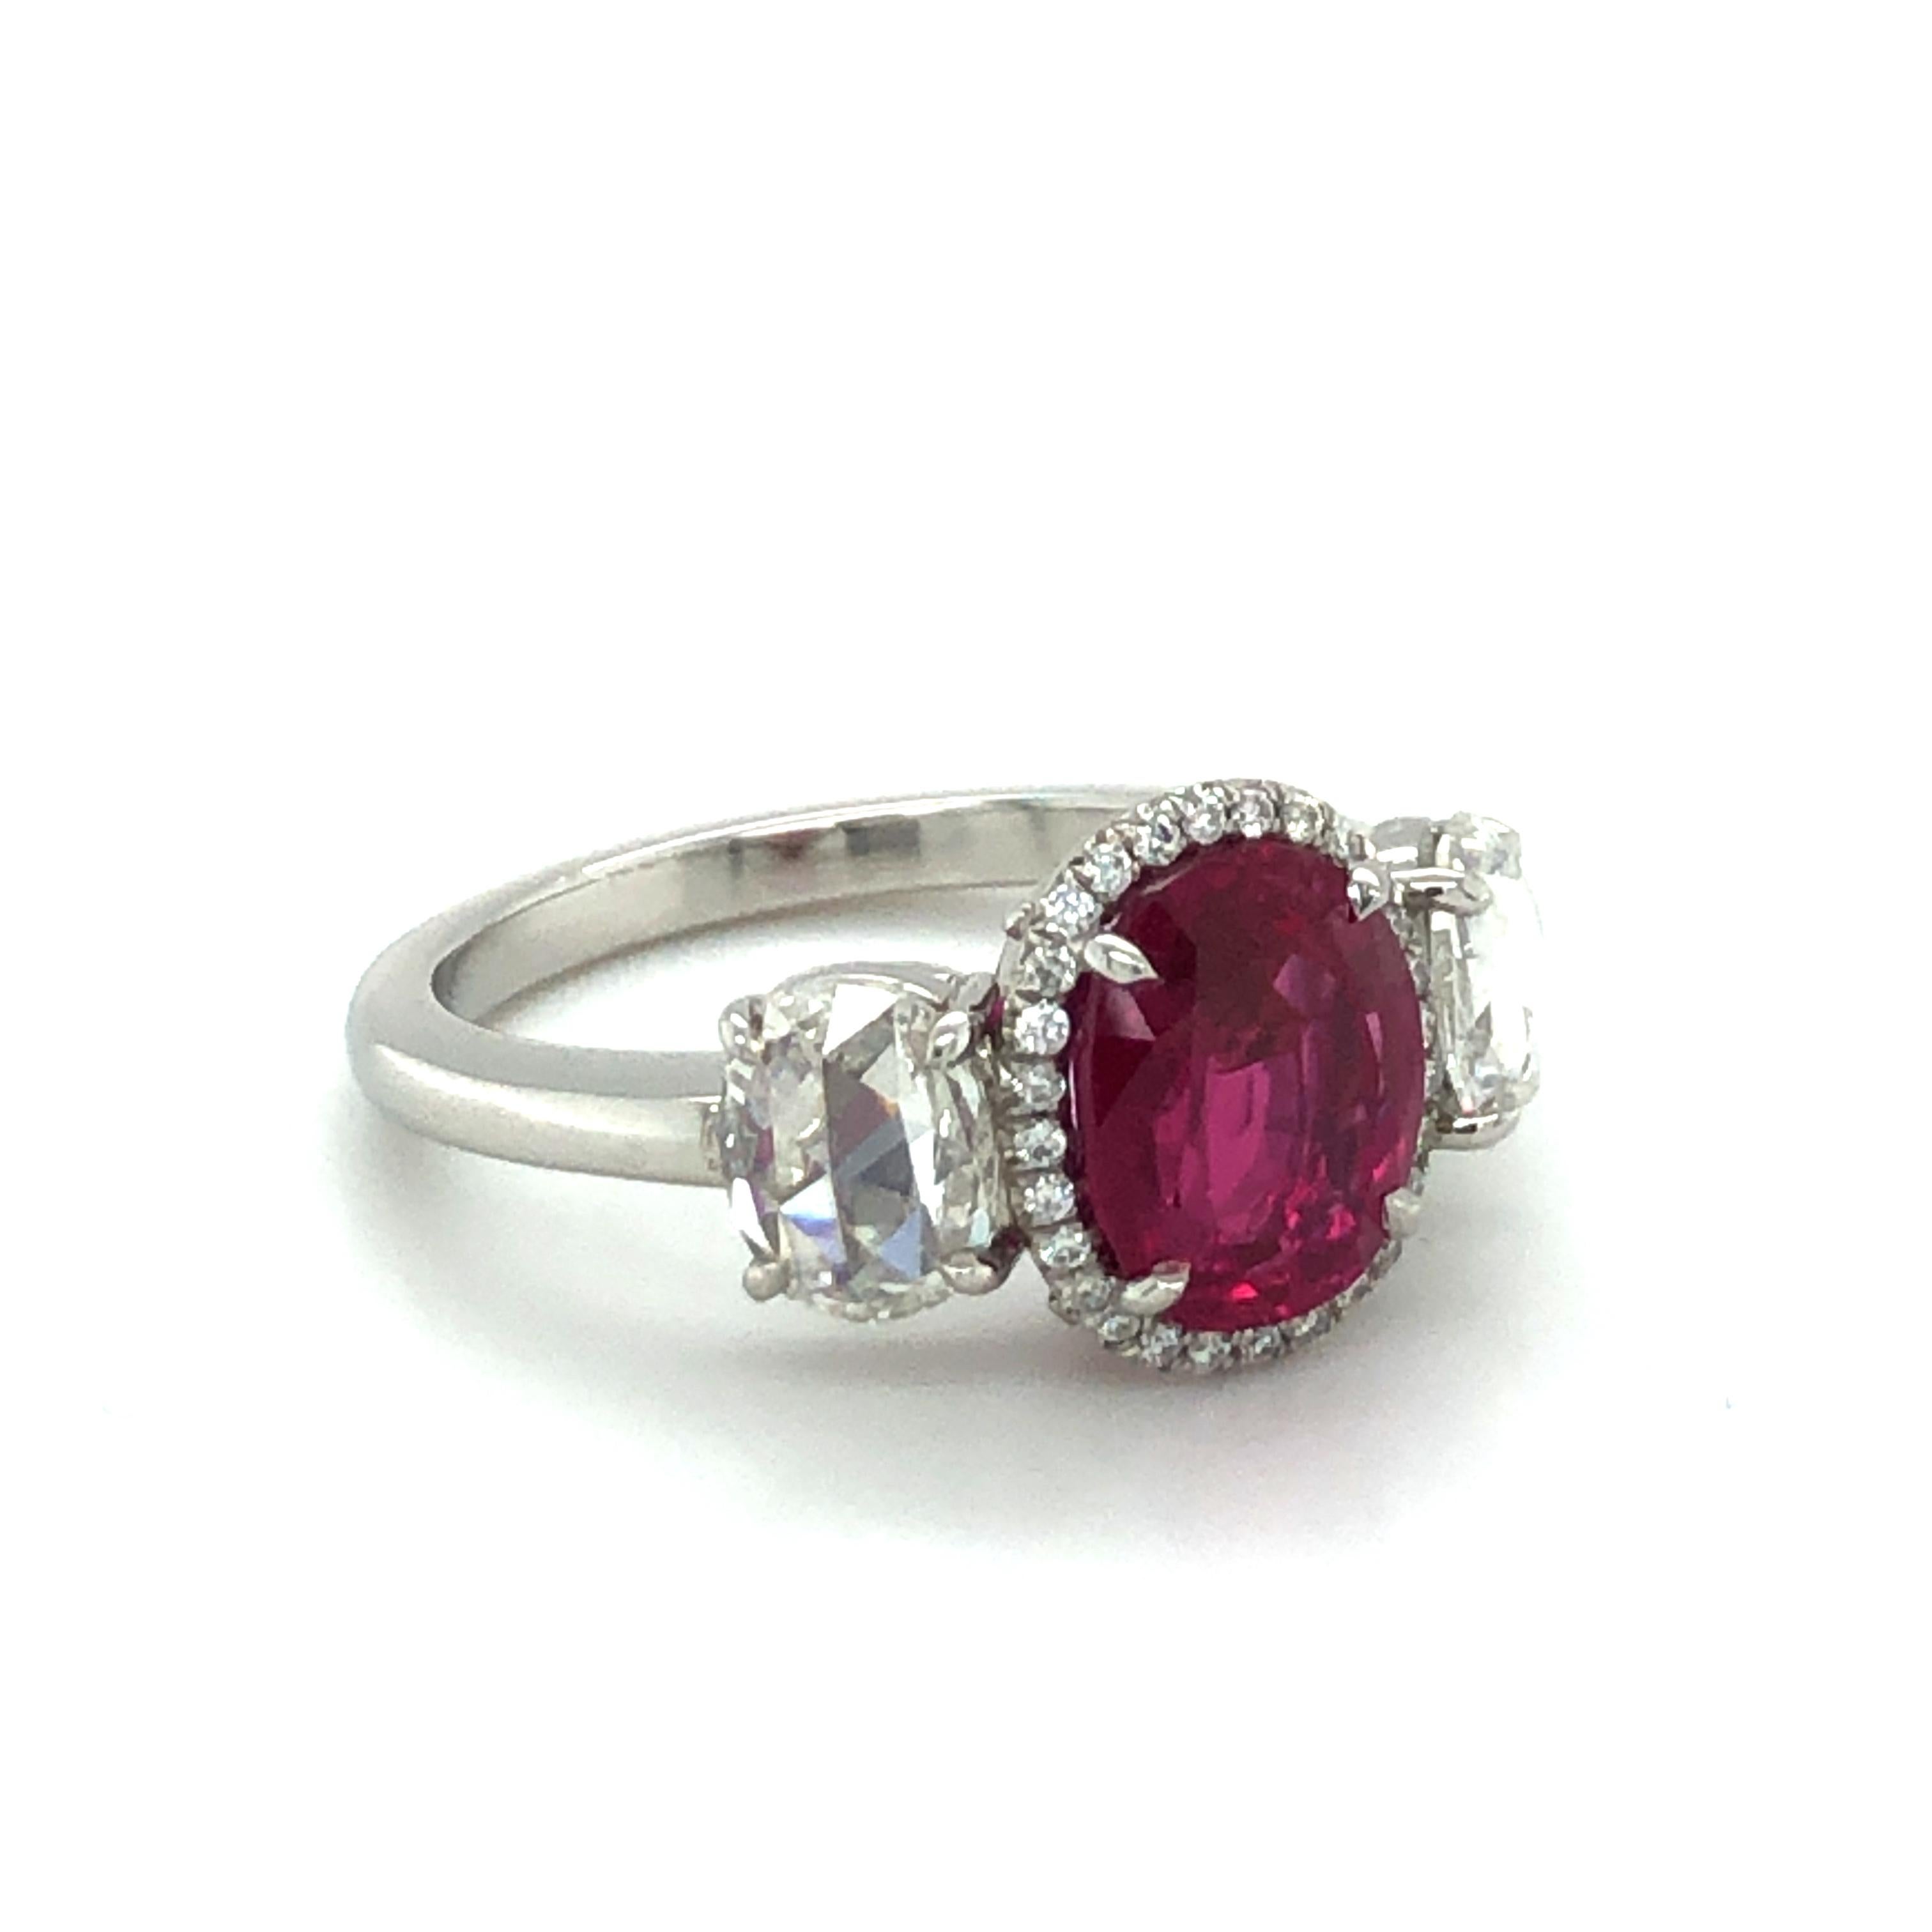 Contemporary Superb 2.73 Carat Burma Ruby and Diamond Ring in Platinum 950